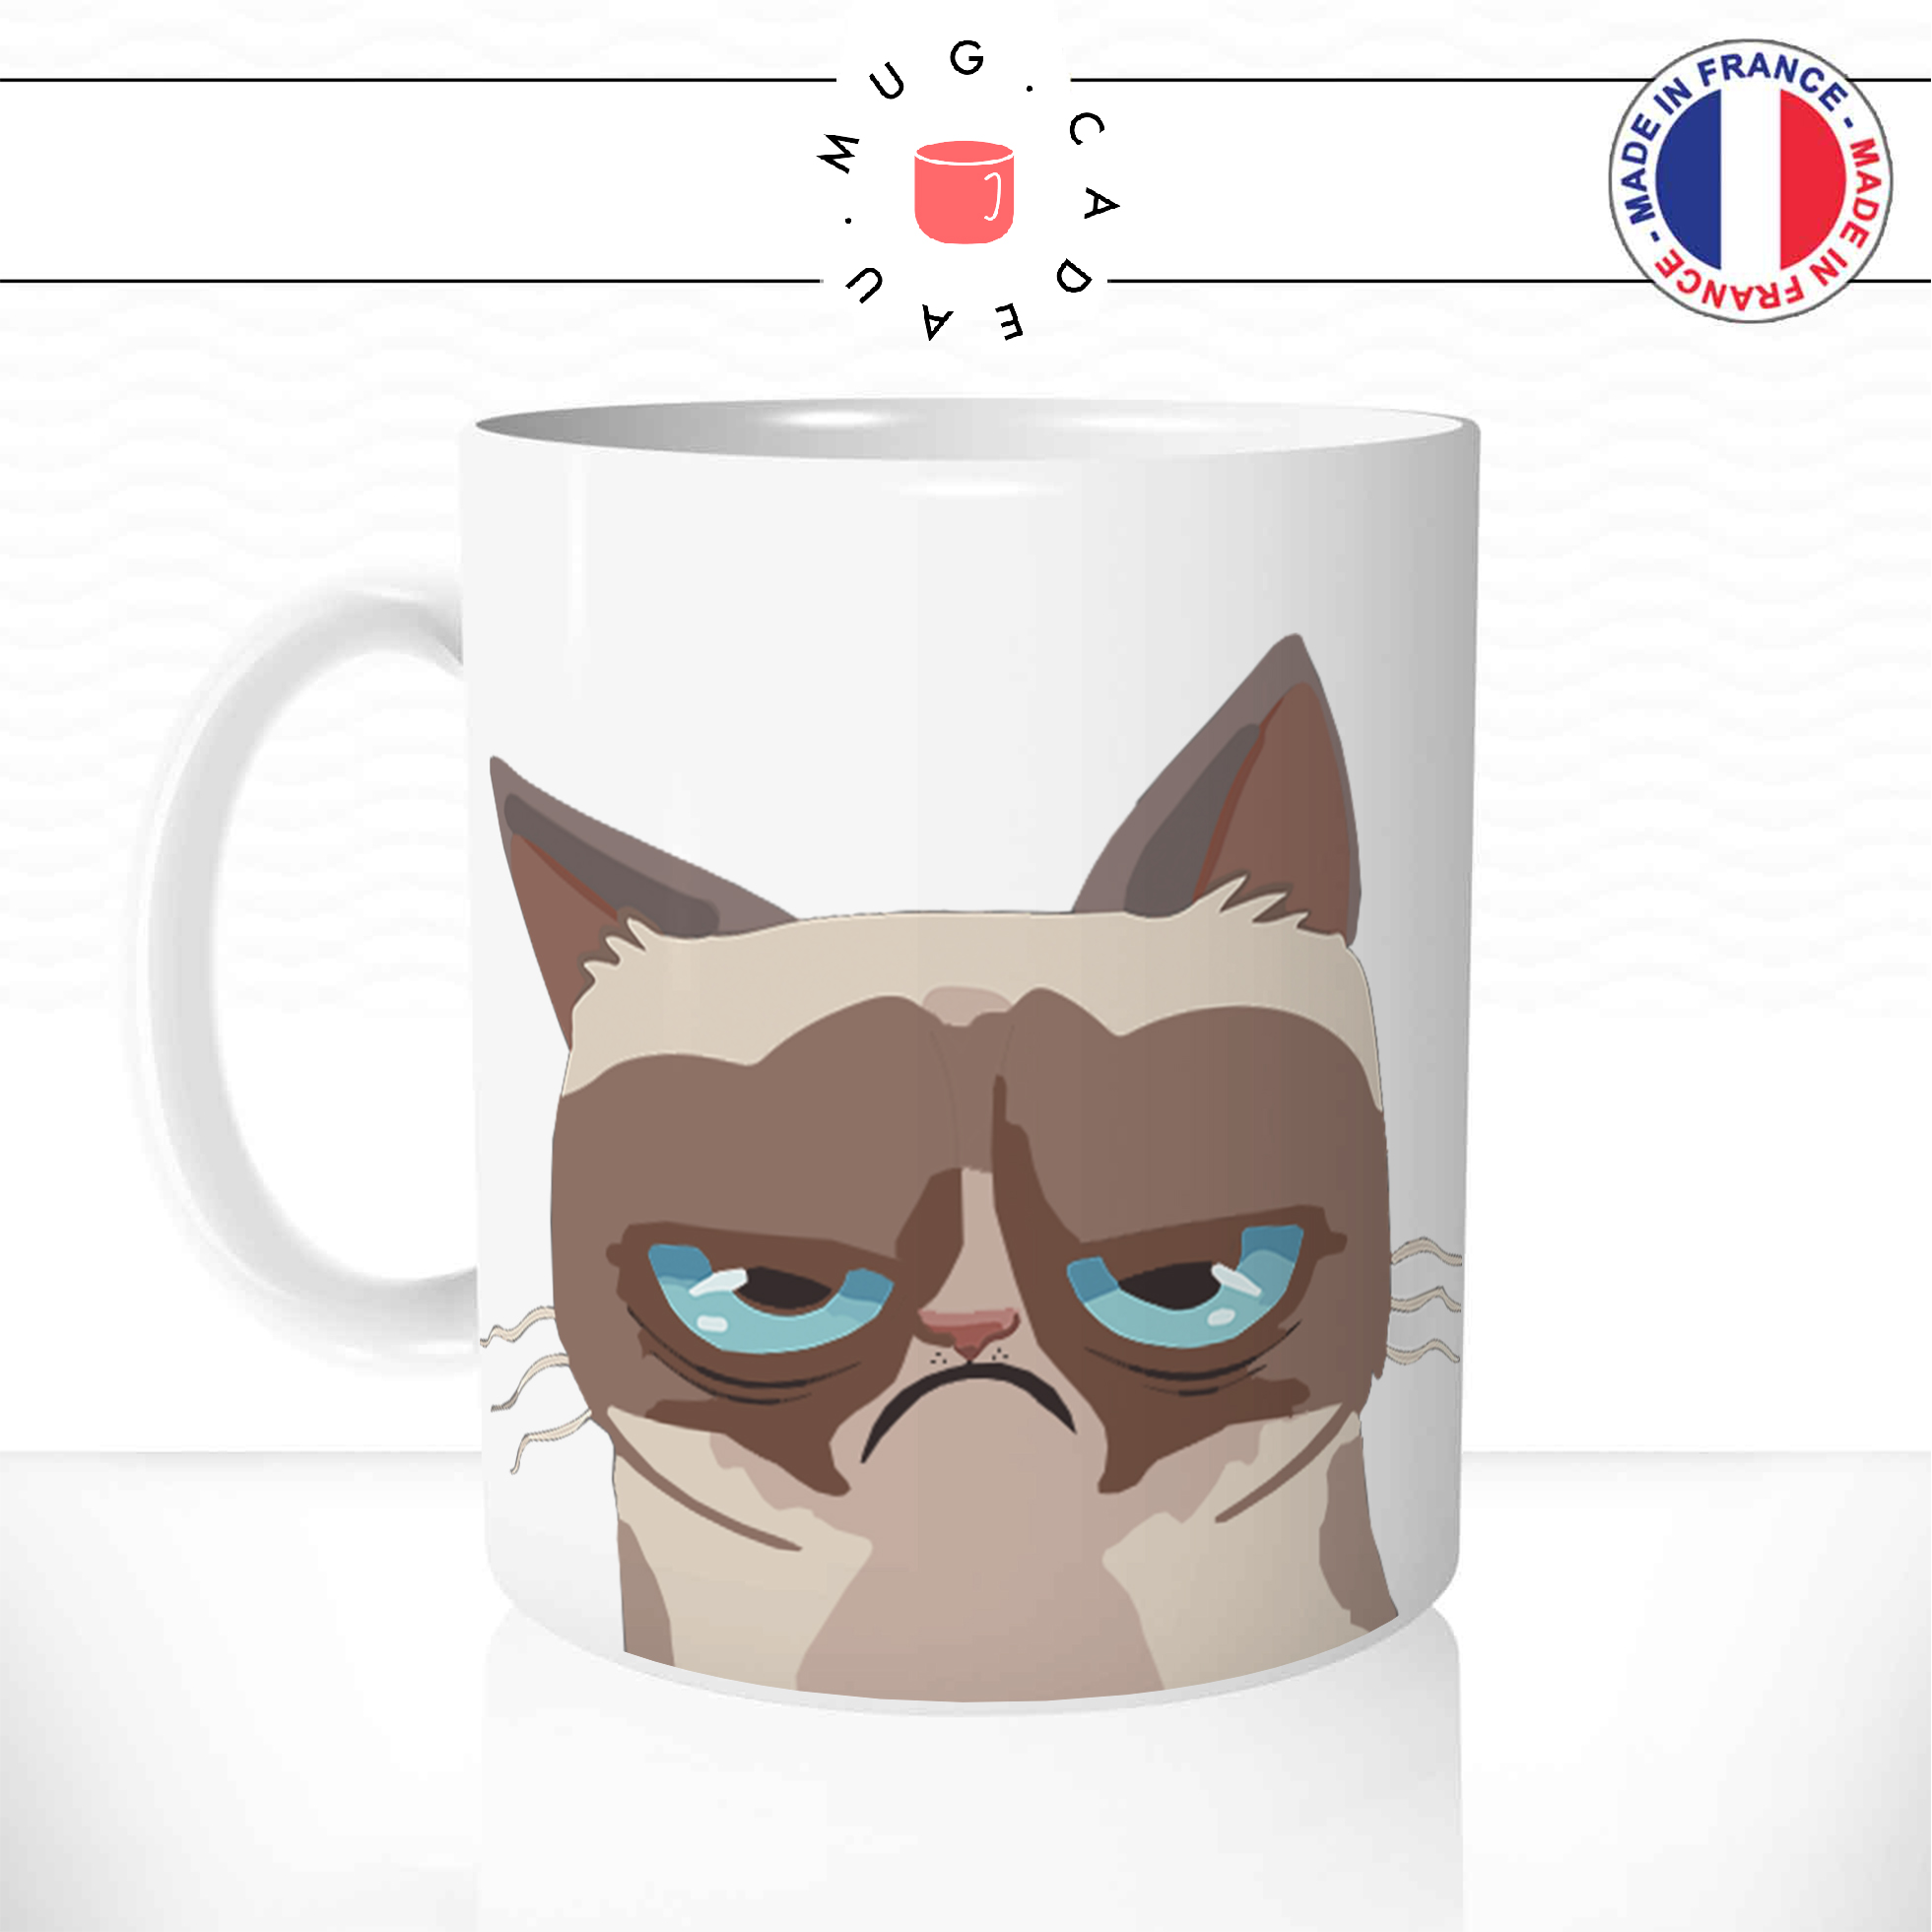 mug-tasse-ref17-chat-grognon-lundi-cafe-the-mugs-tasses-personnalise-cadeau-anse-gauche